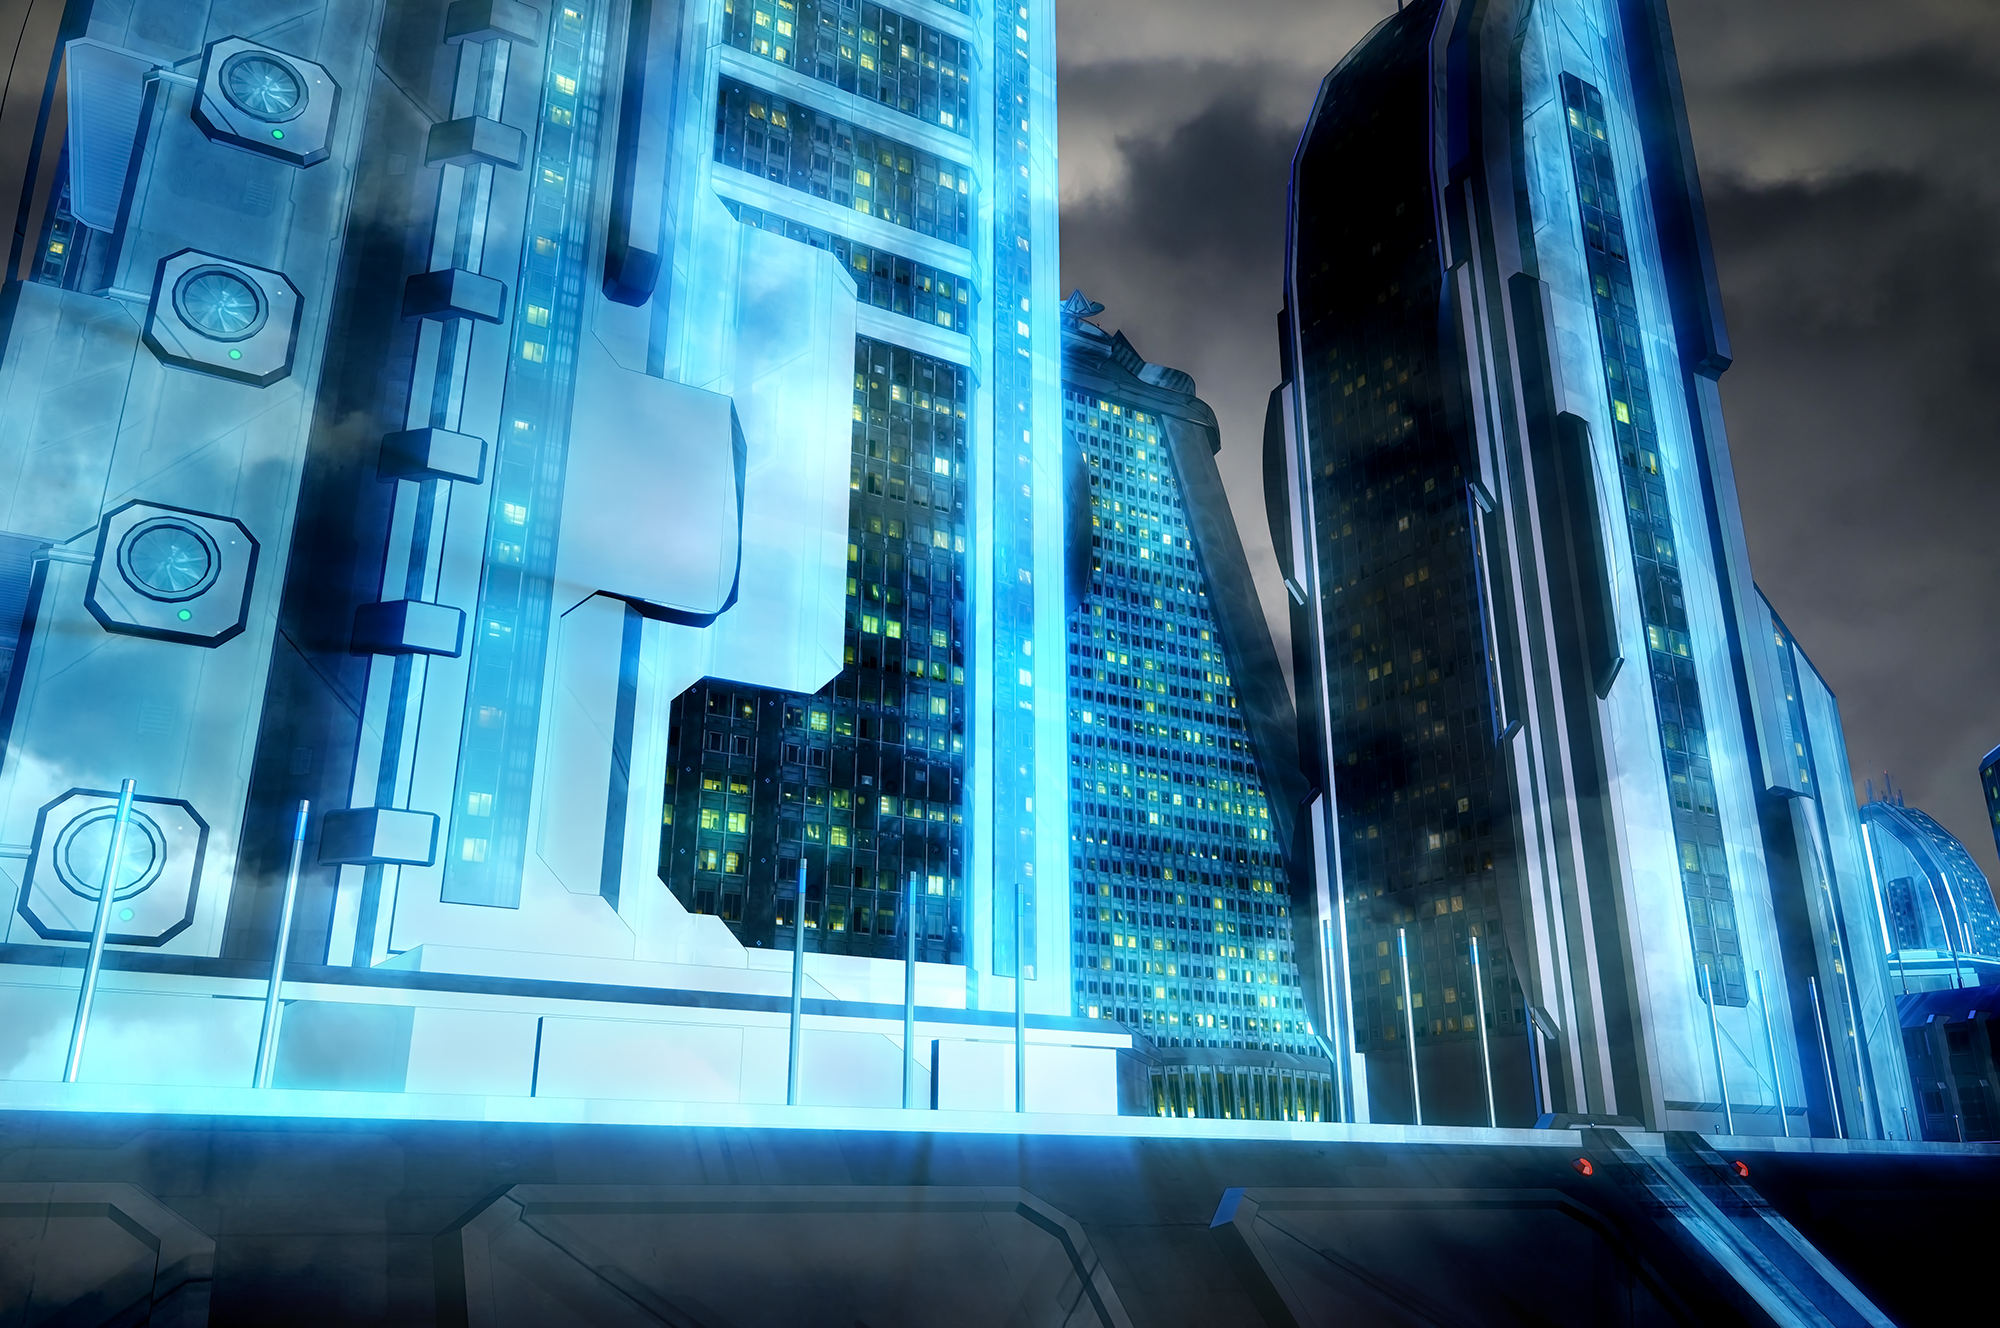 近未来sf都市外観 Future Citys S6 Digitalelf